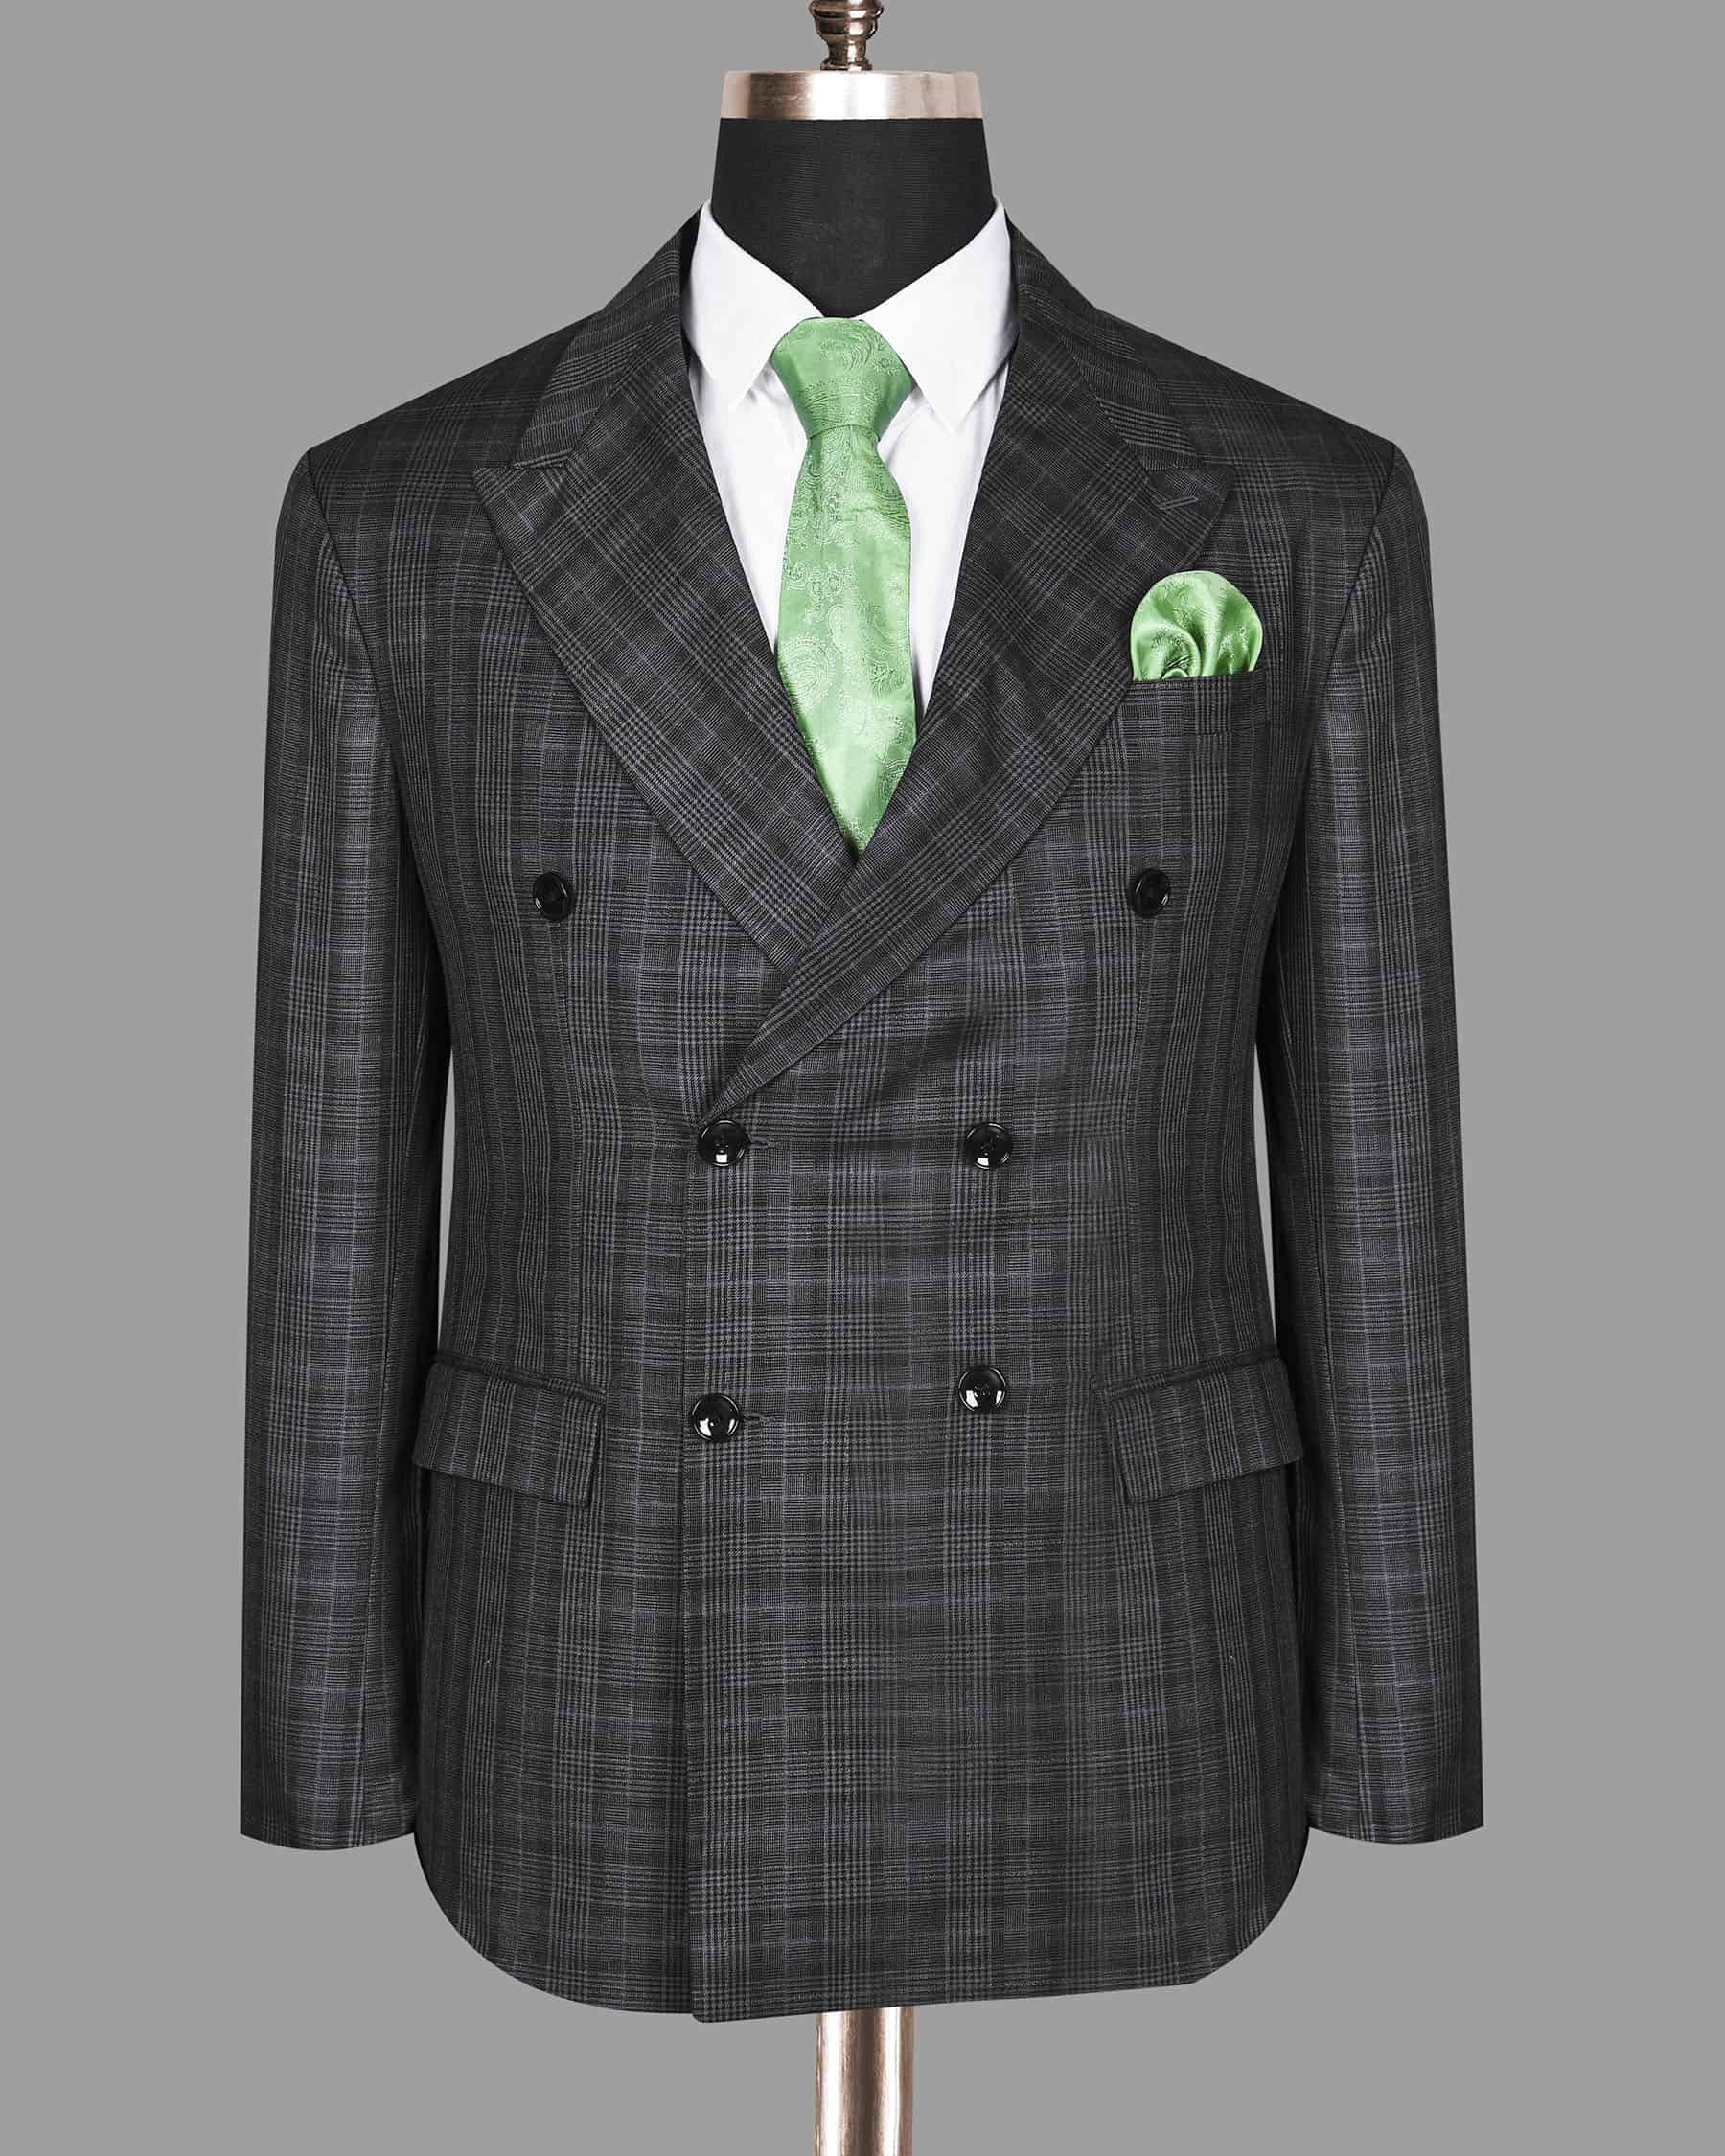 Details more than 135 grey suit combinations super hot